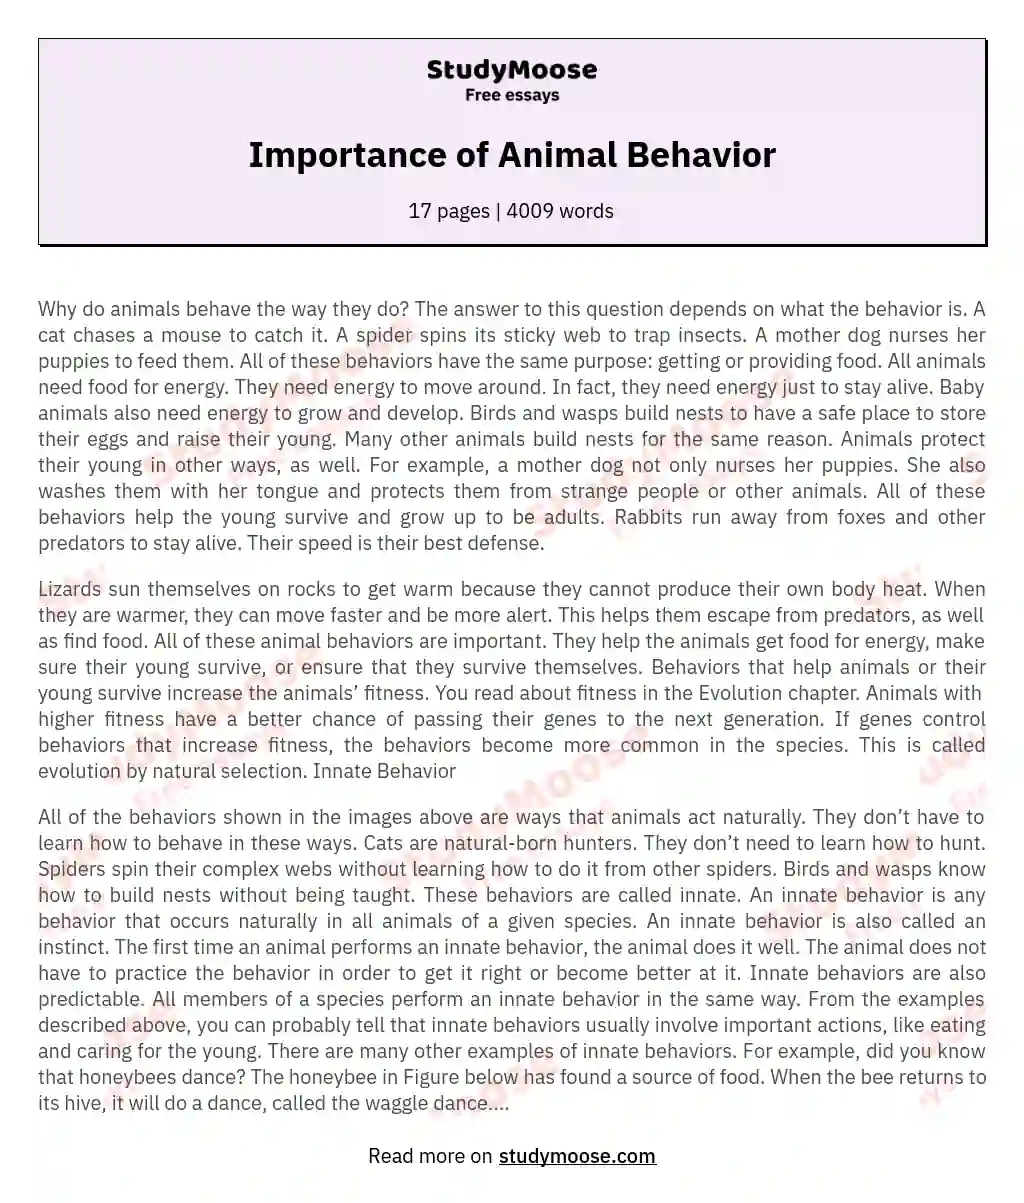 Importance of Animal Behavior essay